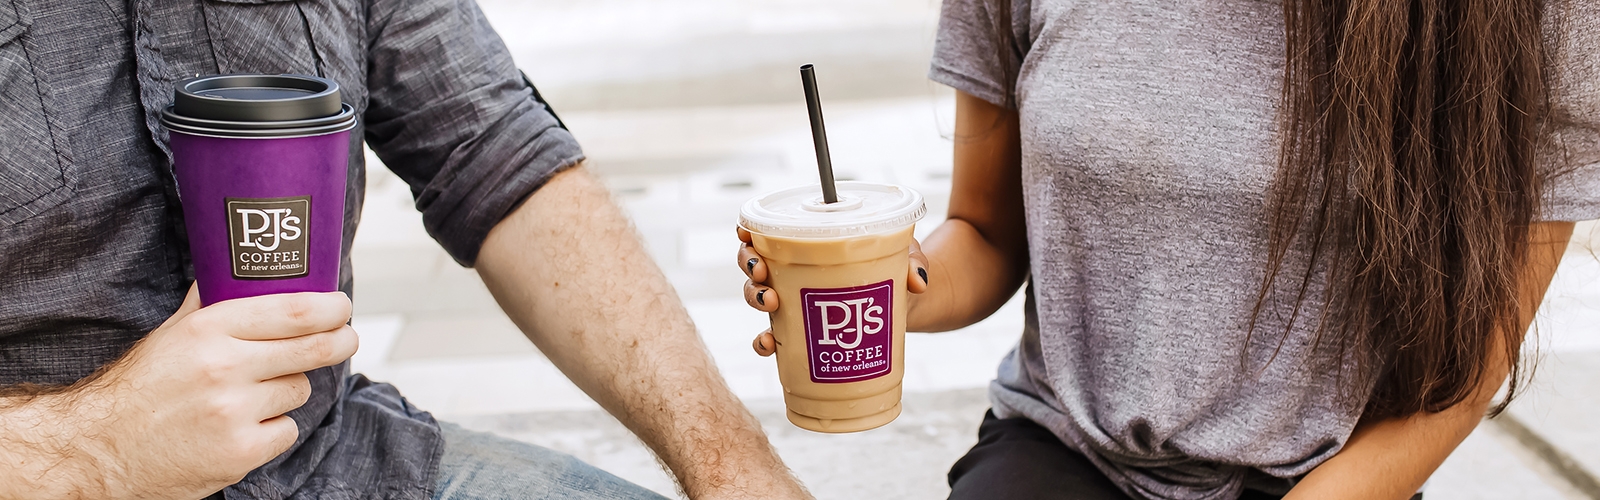 PJ's Coffee + Ochsner Eat Fit